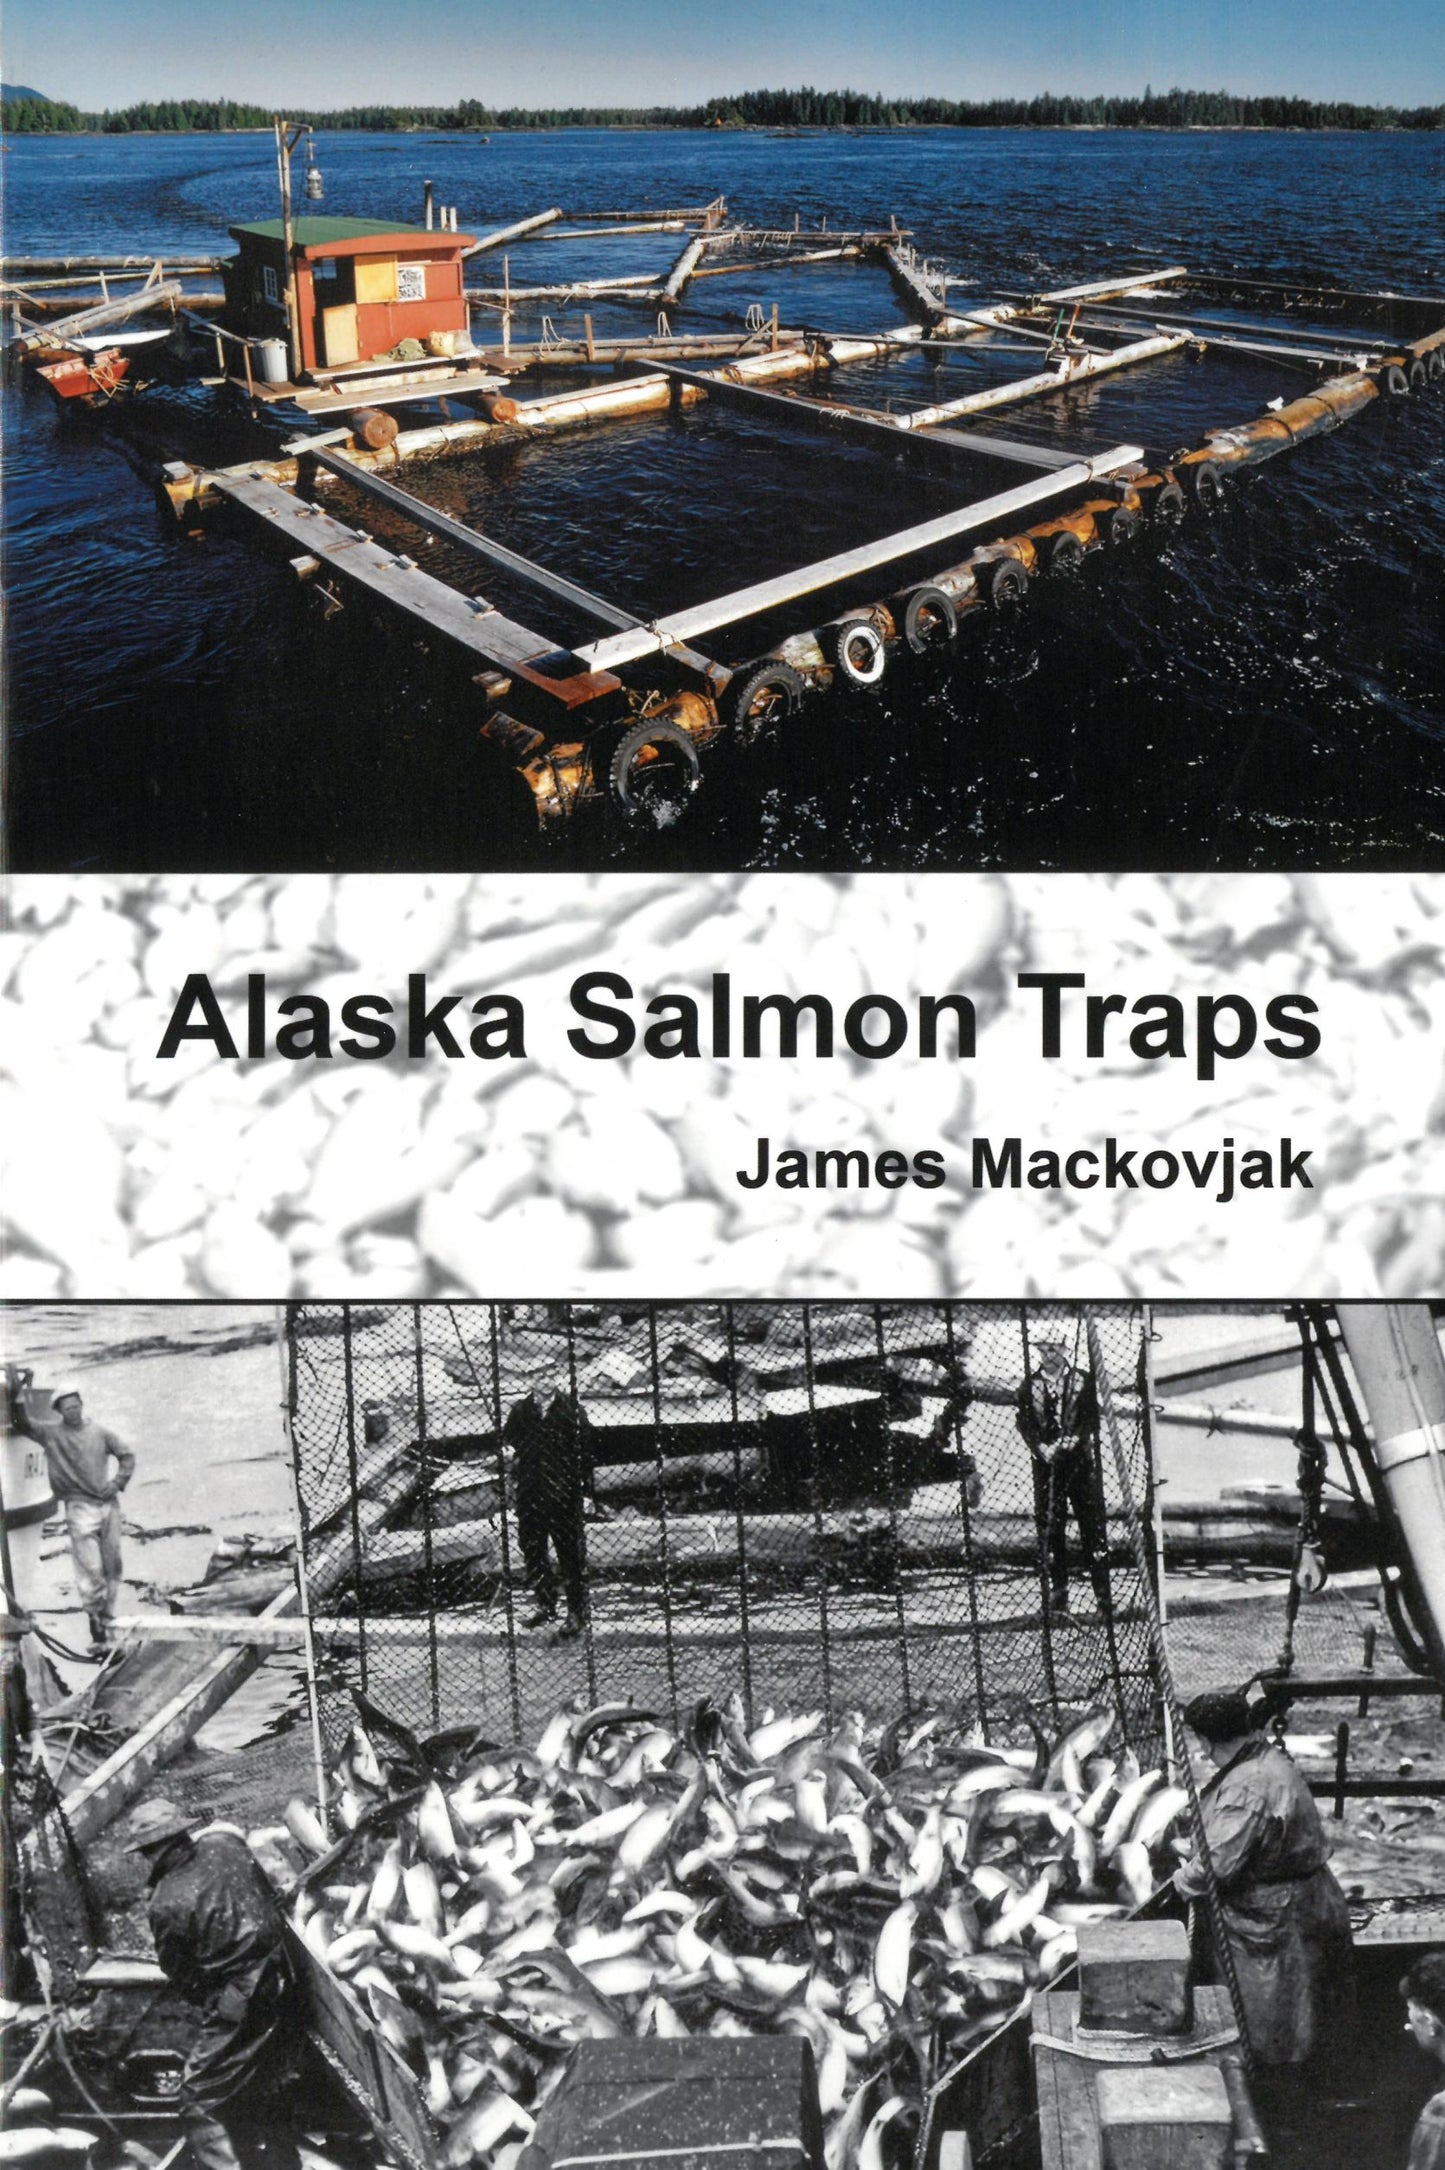 Alaska Salmon Traps by James Mackovjak